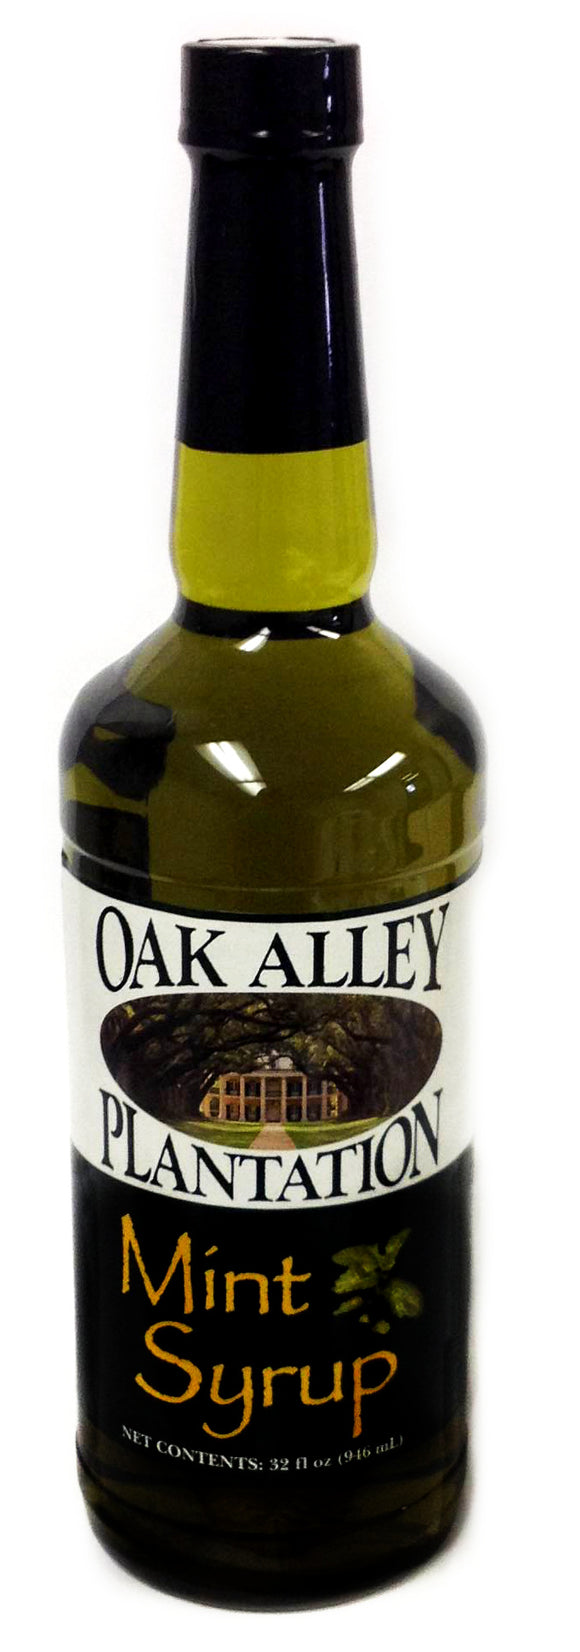 Oak Alley Plantation Mint Syrup